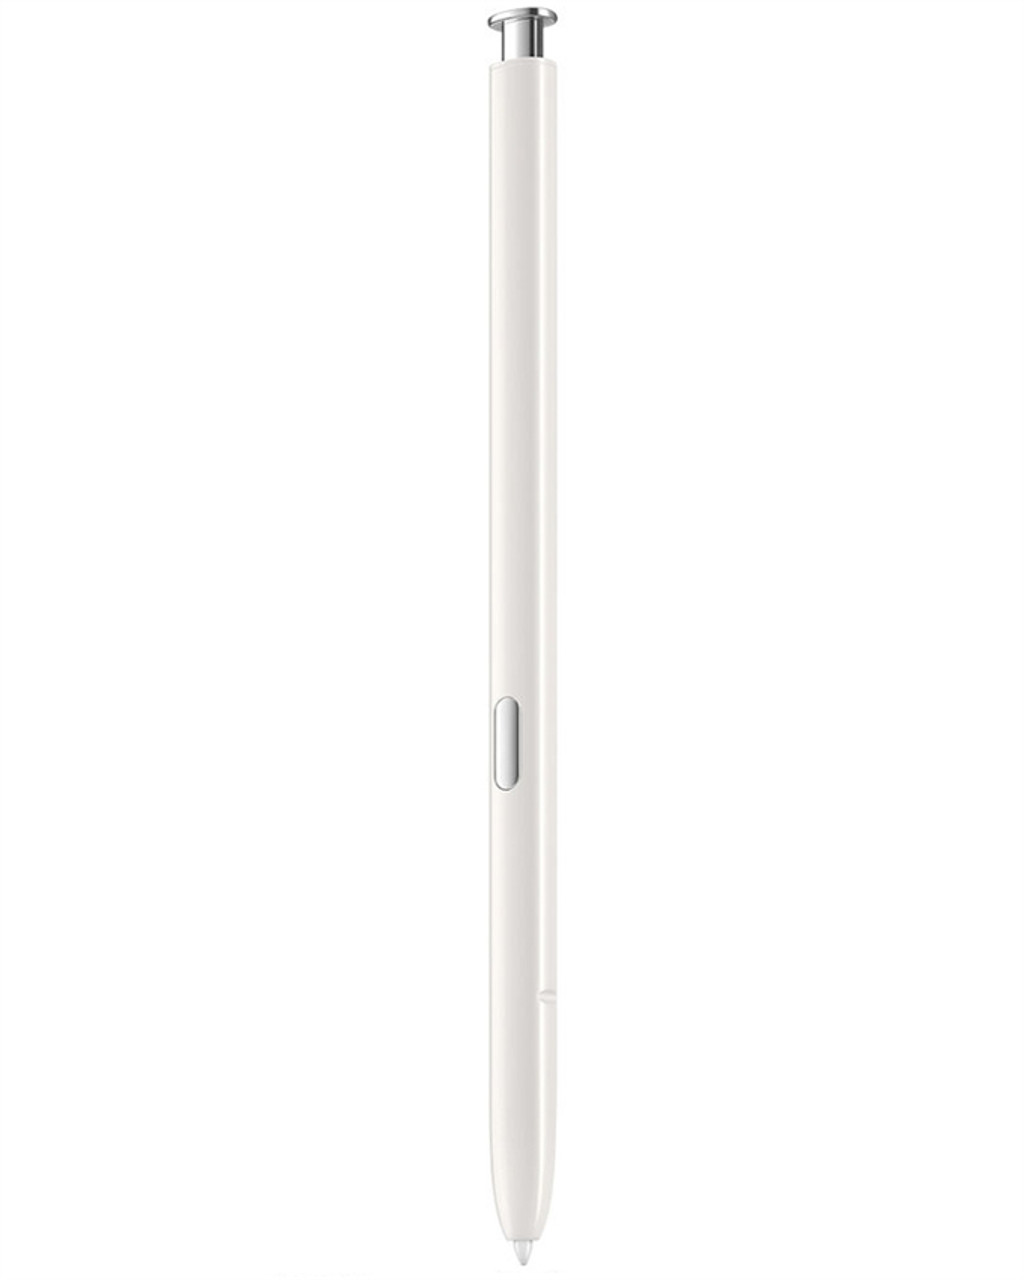  Samsung Galaxy Note 10+ Plus 256GB with S Pen Aura